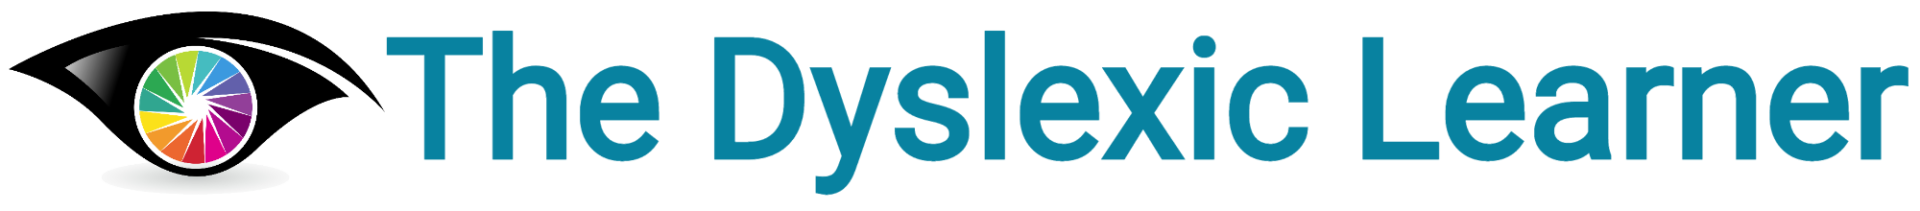 The Dyslexic Learner Logo